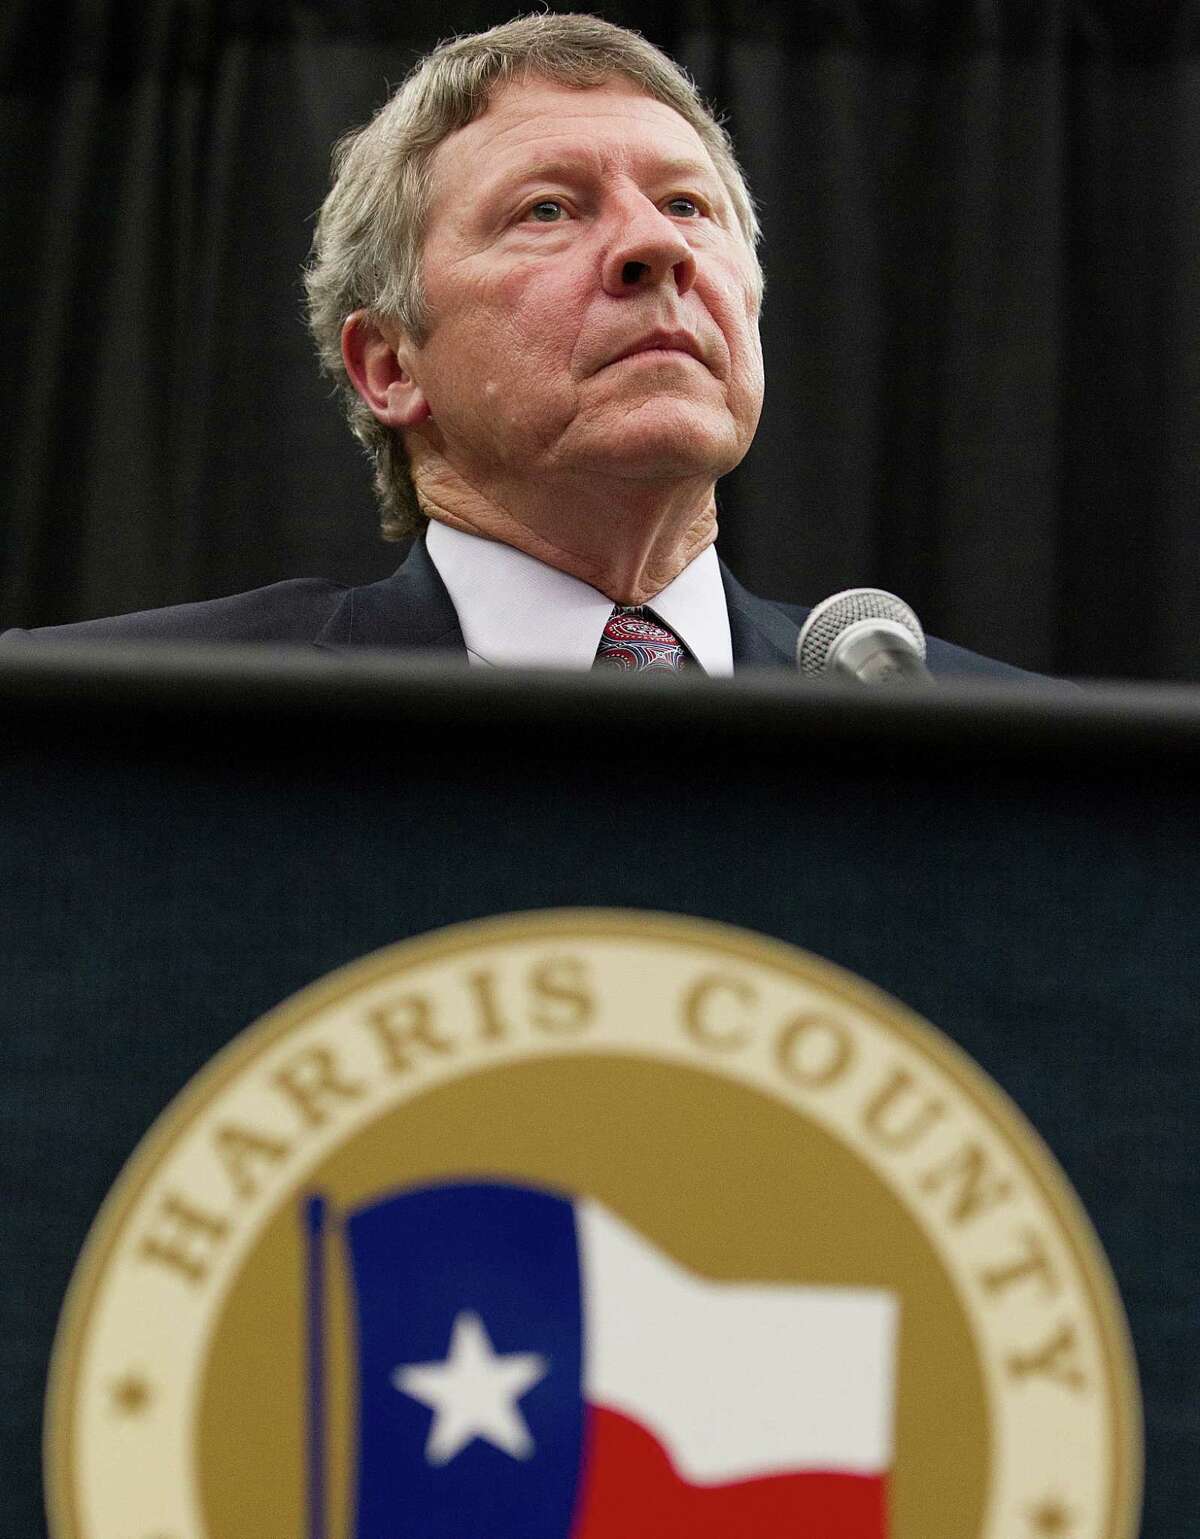 Harris County Judge Ed Emmett